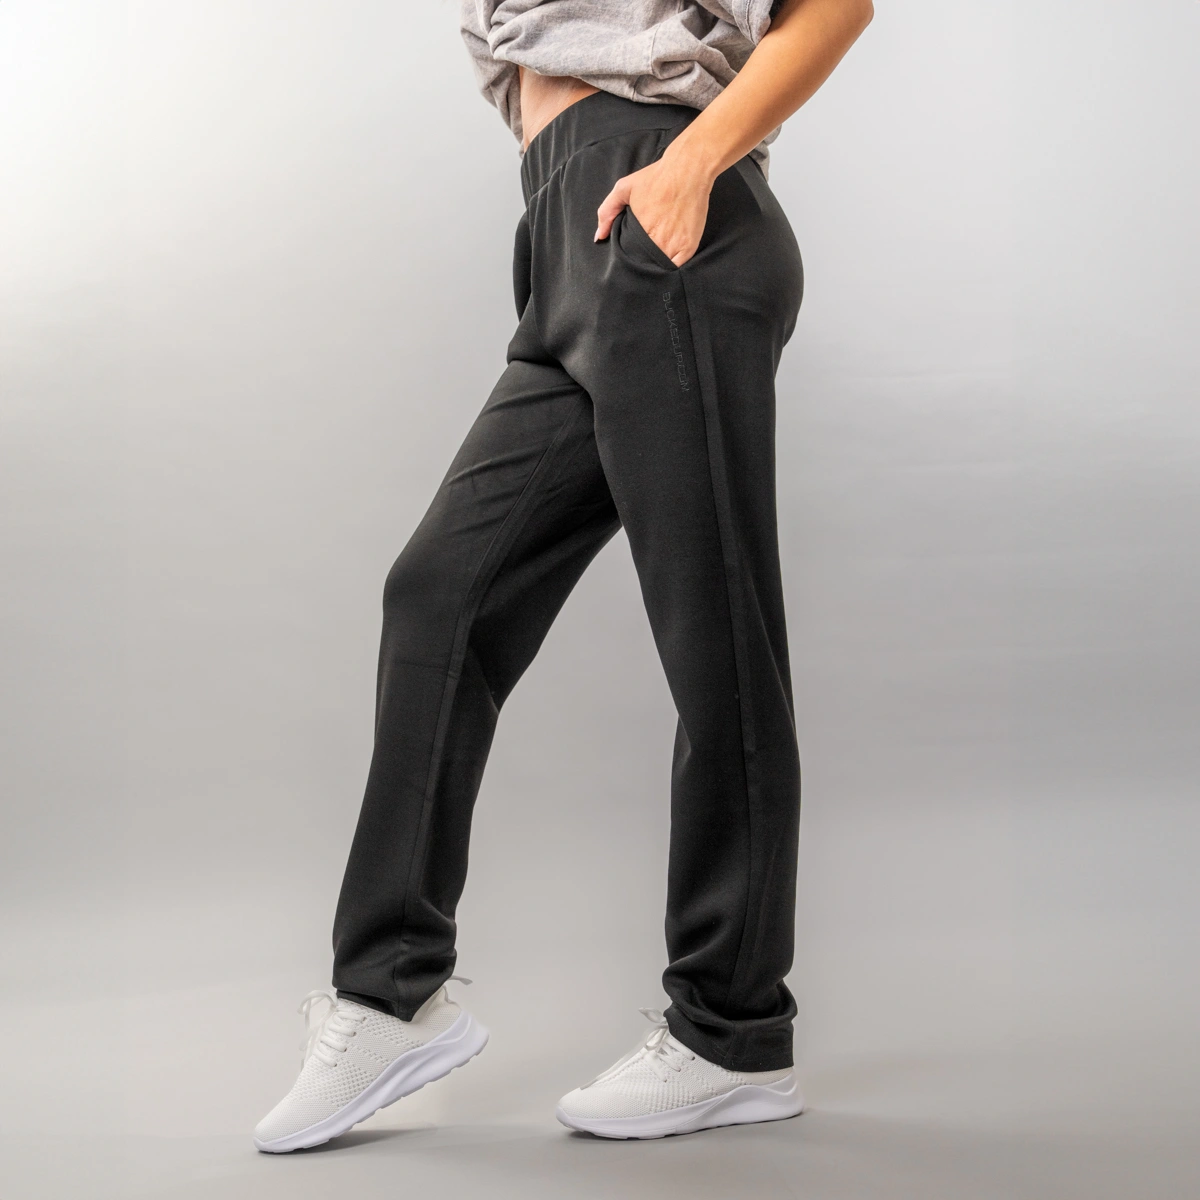 Hocus Pocus Women's Soft Jogger Loungepant with Pockets